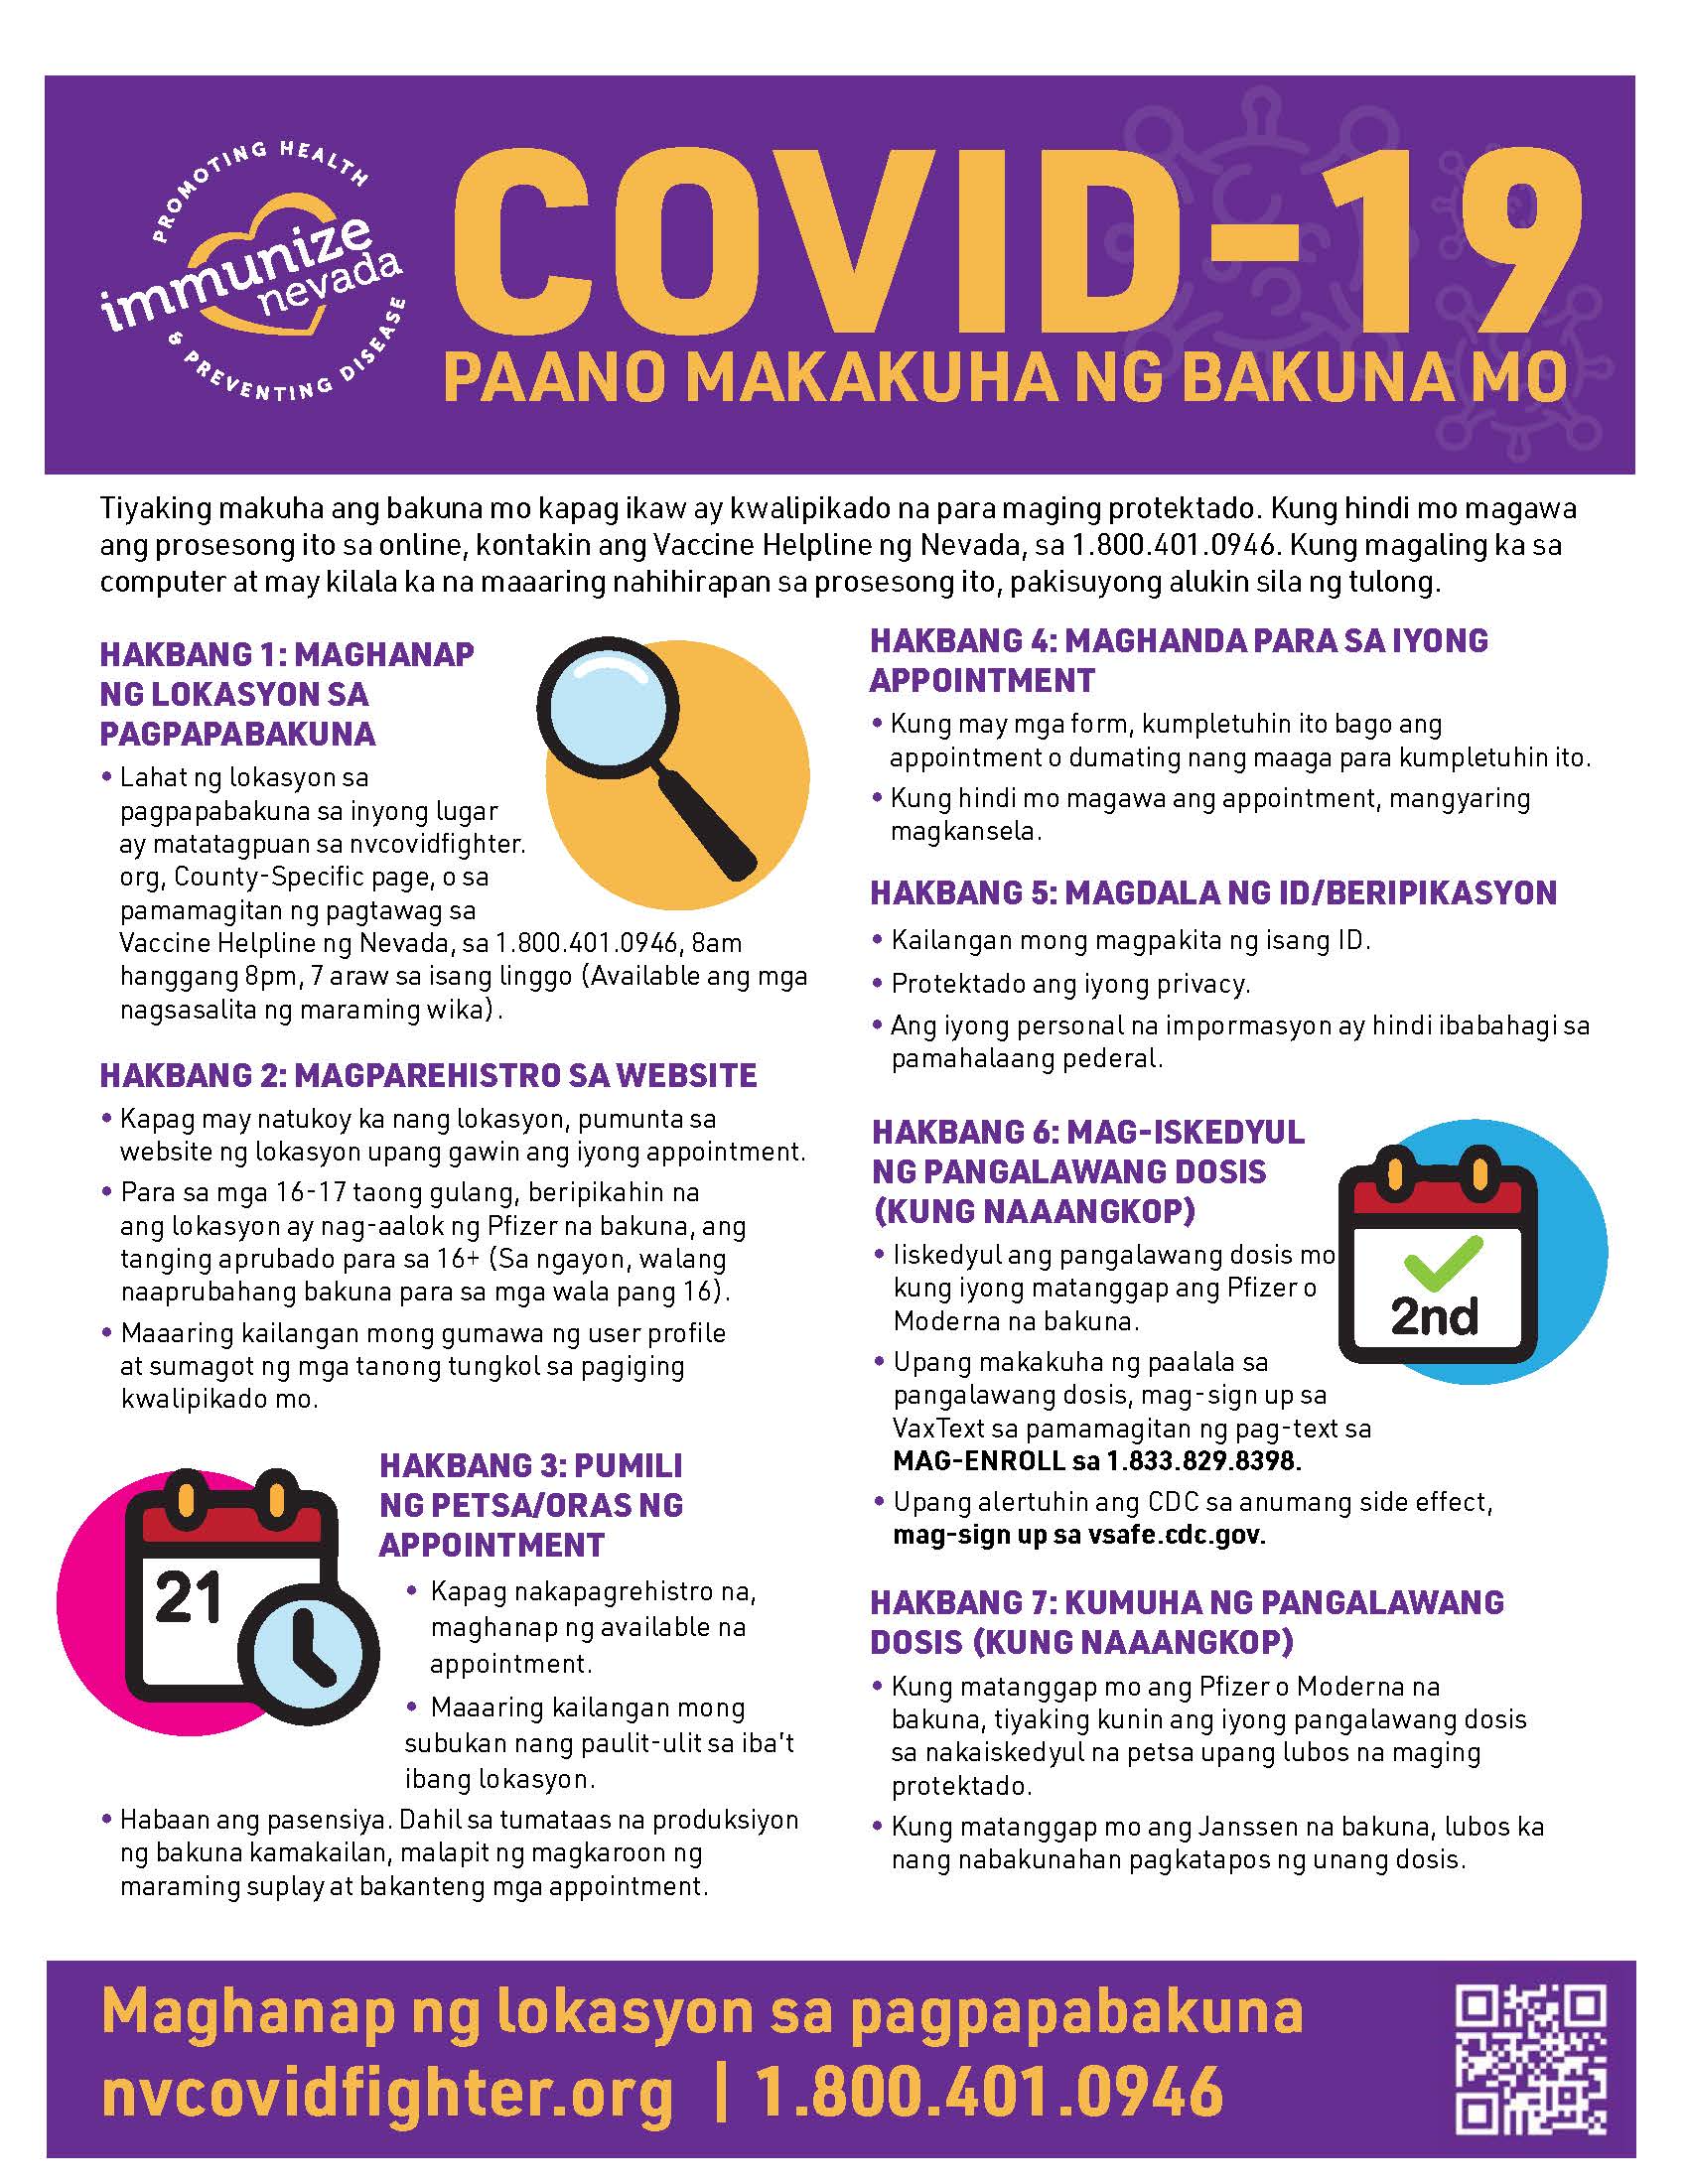 COVID-19 Vaccine Appointment Steps Flyer Tagalog_v1